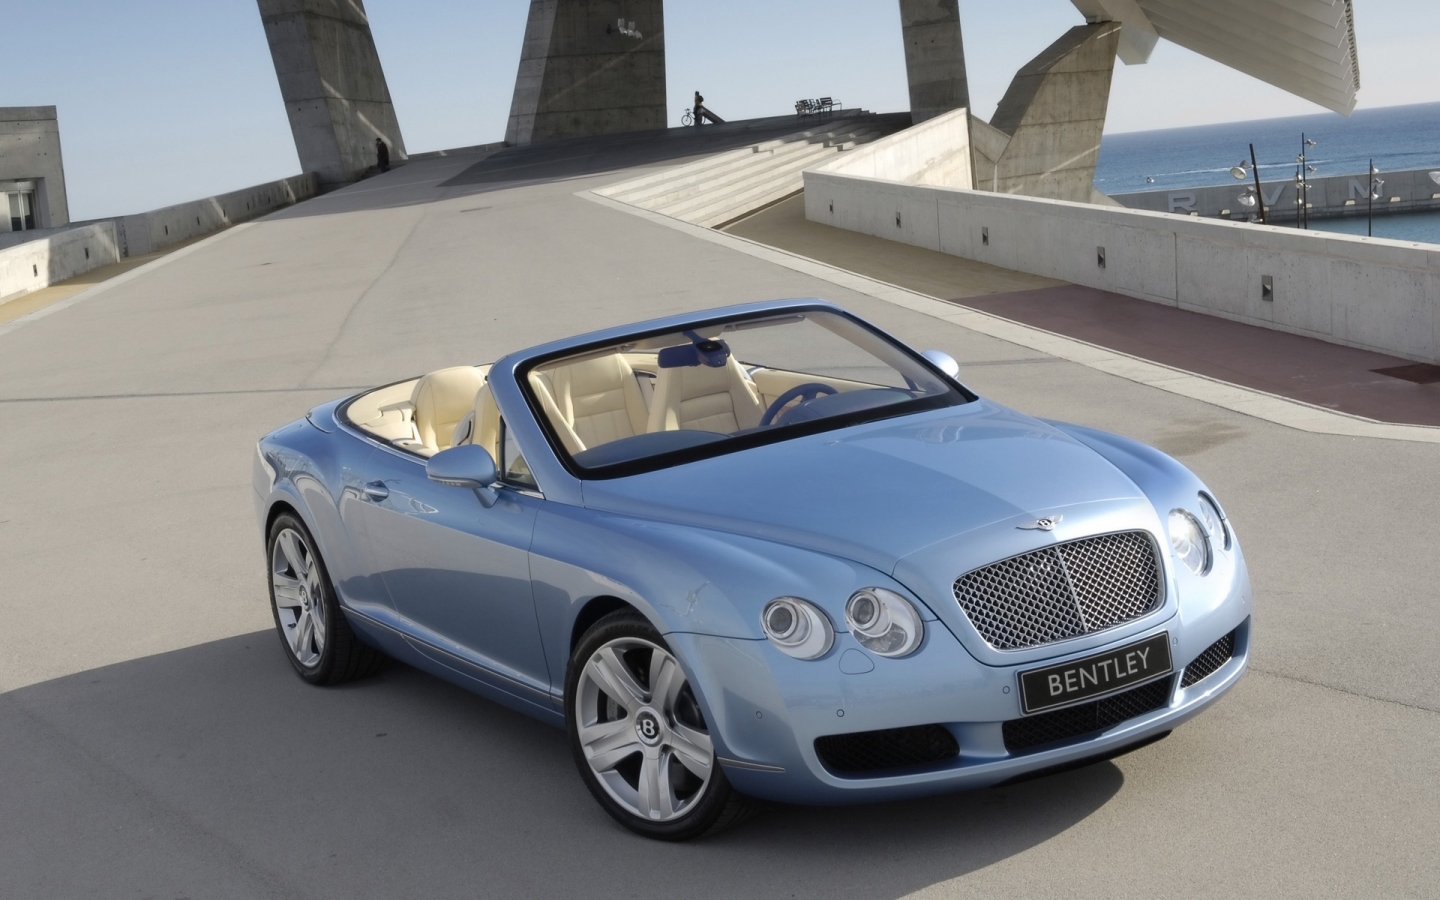 Bentley Continental GTC 2007 for 1440 x 900 widescreen resolution